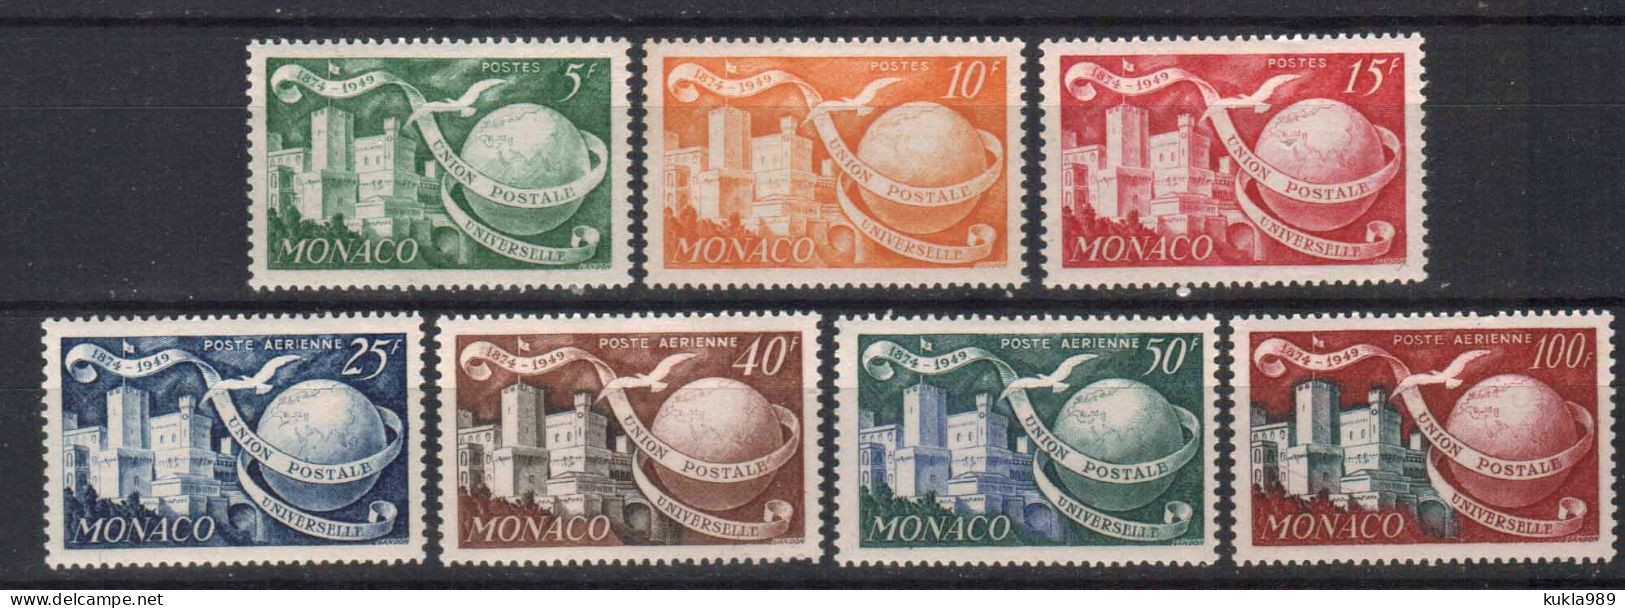 MONACO STAMPS 1949 Mi.#401-407, MNH - Unused Stamps